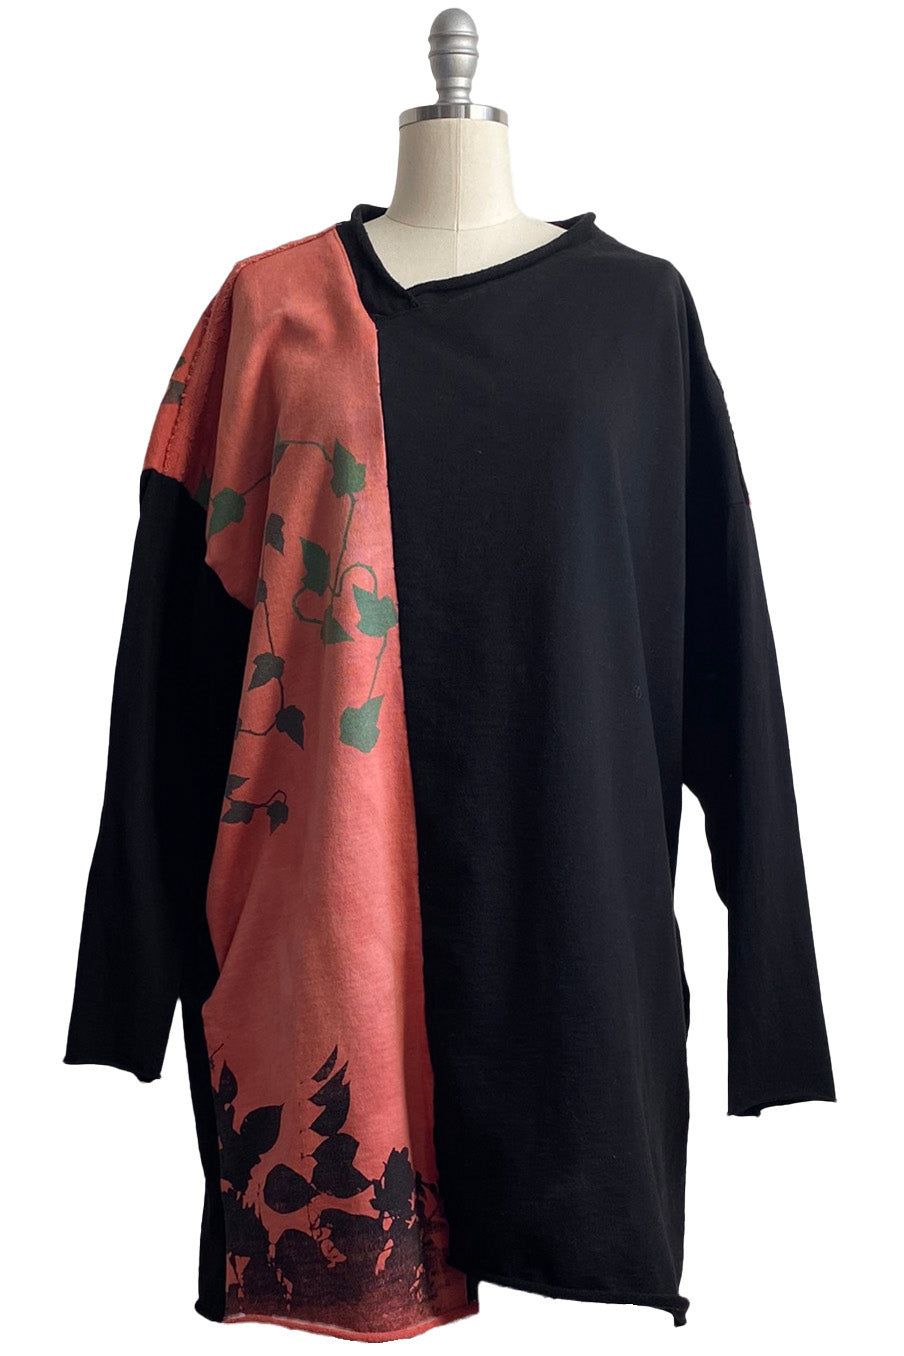 Petra Long Sleeve Tunic Knit w/ Vine Print - Black & Orange Coral Overdye - Large